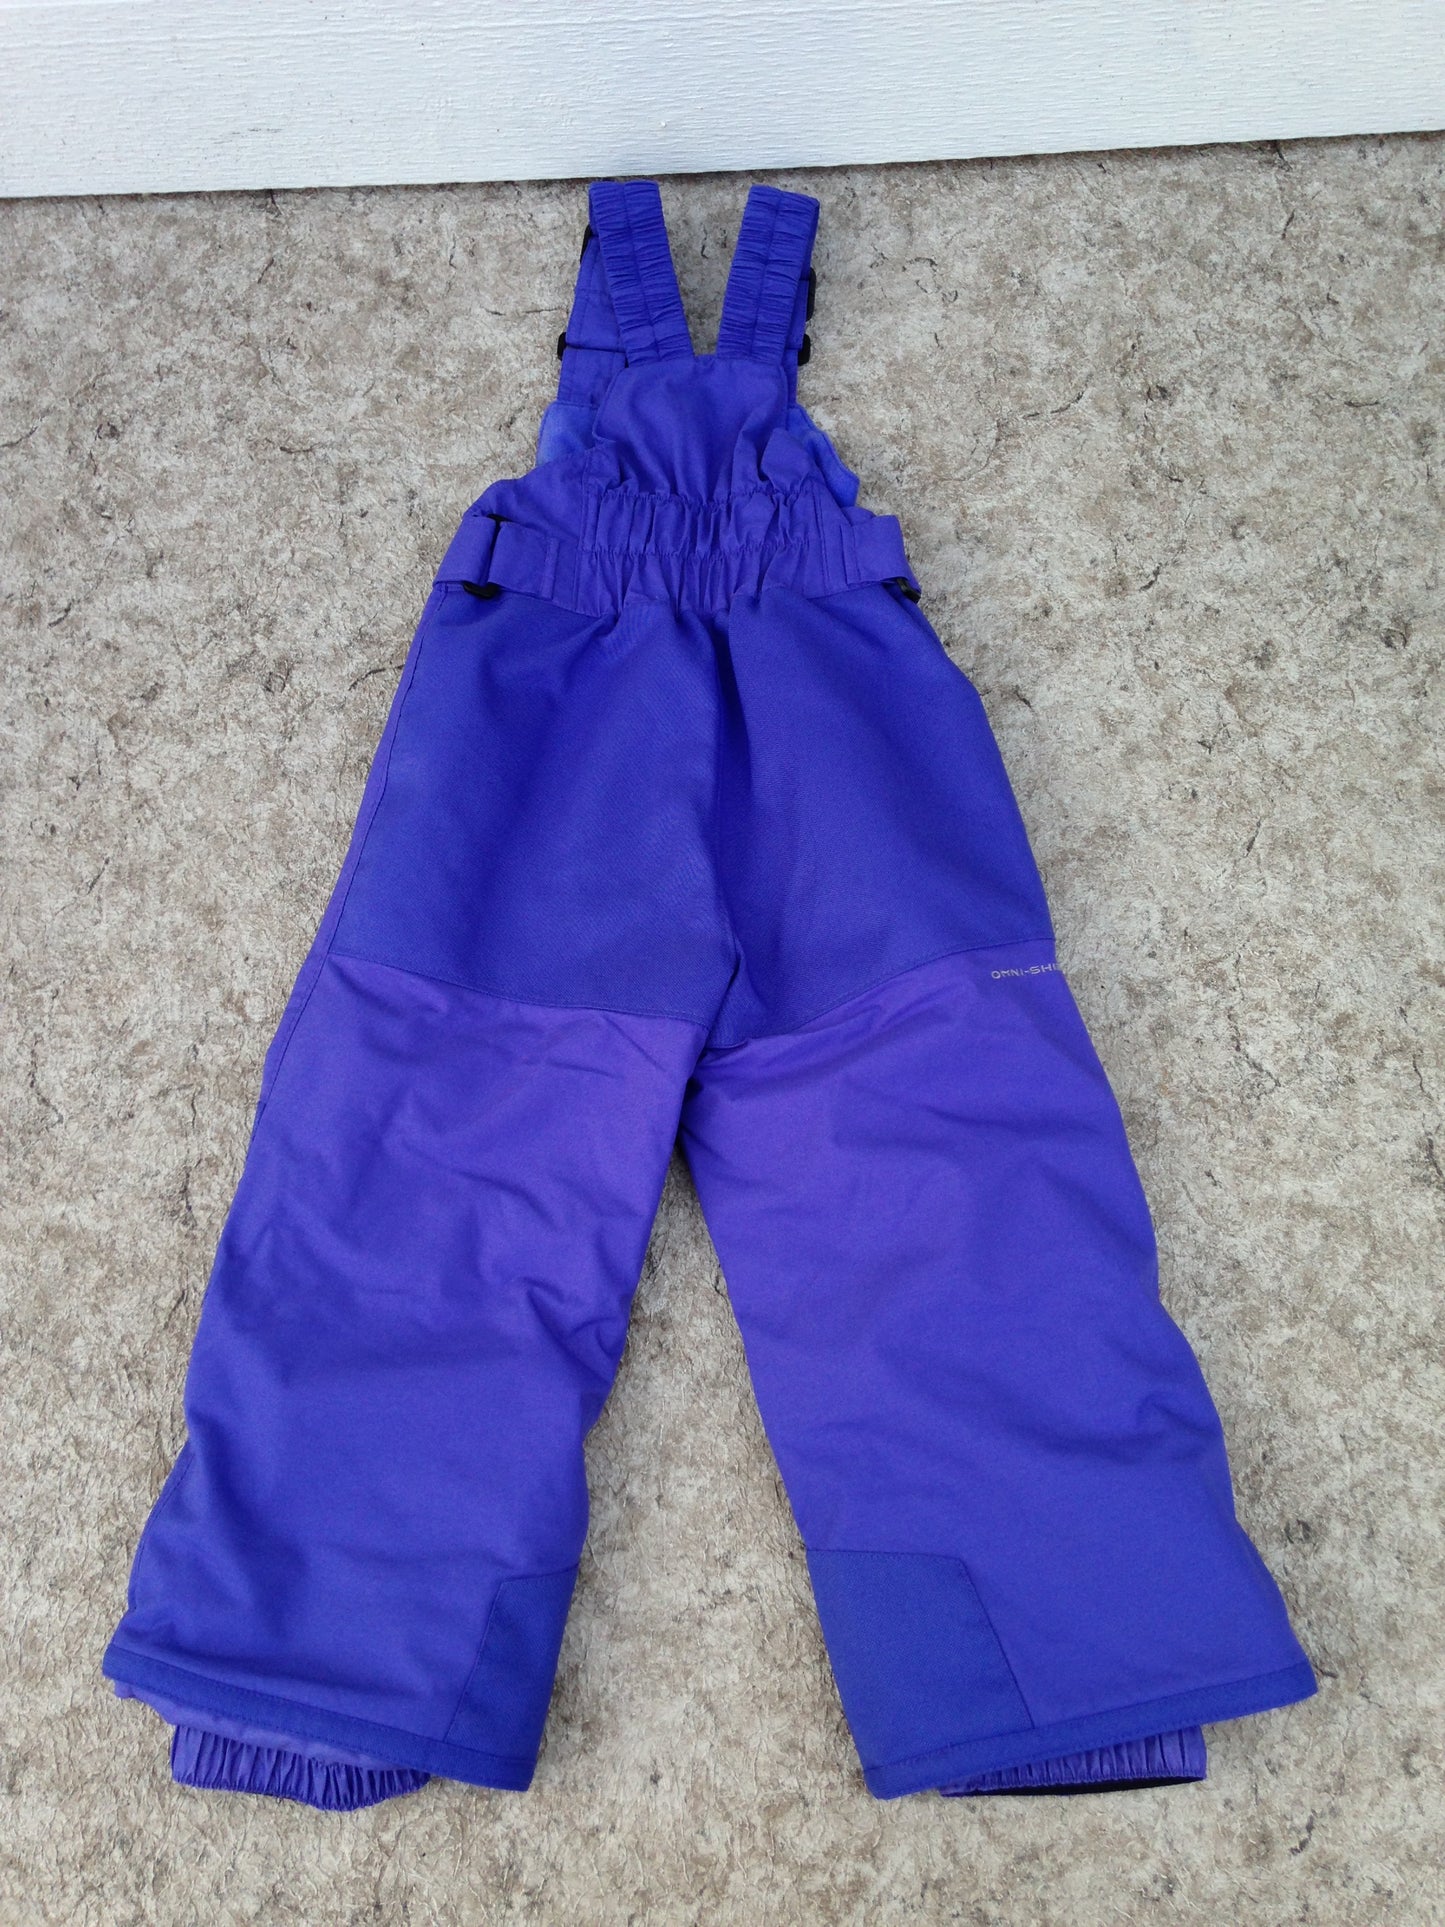 Snow Pants Child Size 4 Columbia Purple With Bib New Demo Model